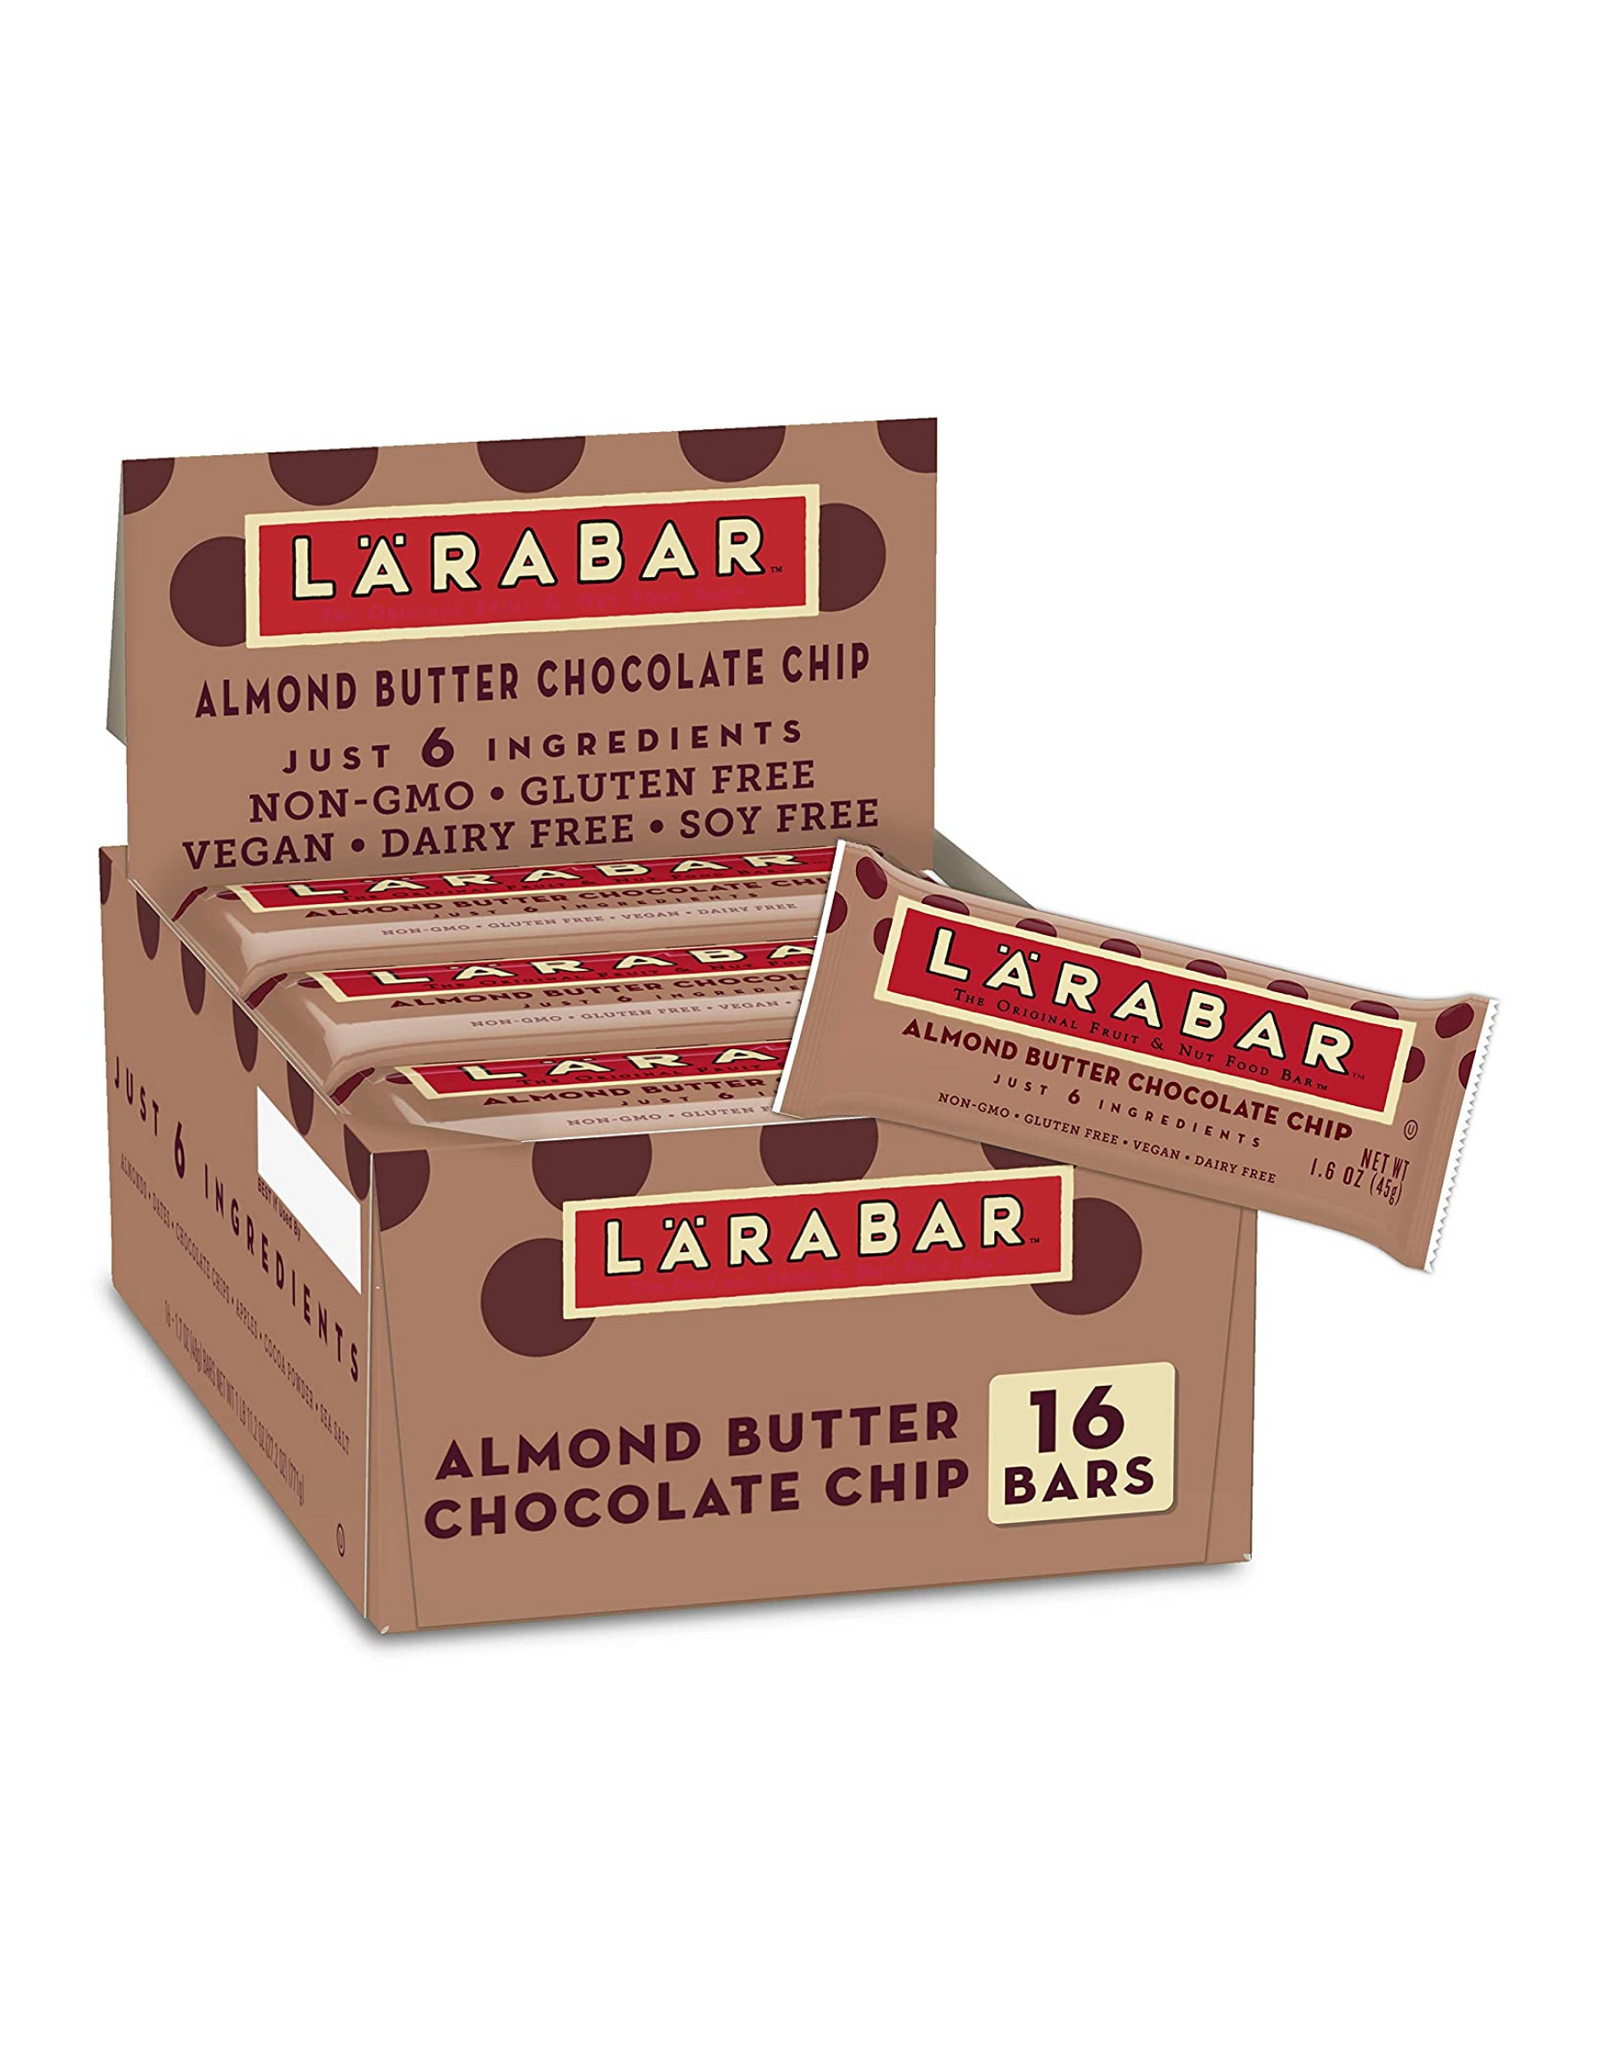 Larabar Almond Butter Chocolate Chip, Original Real Fruit and Nut Bar, 1.7 oz, 16 Count